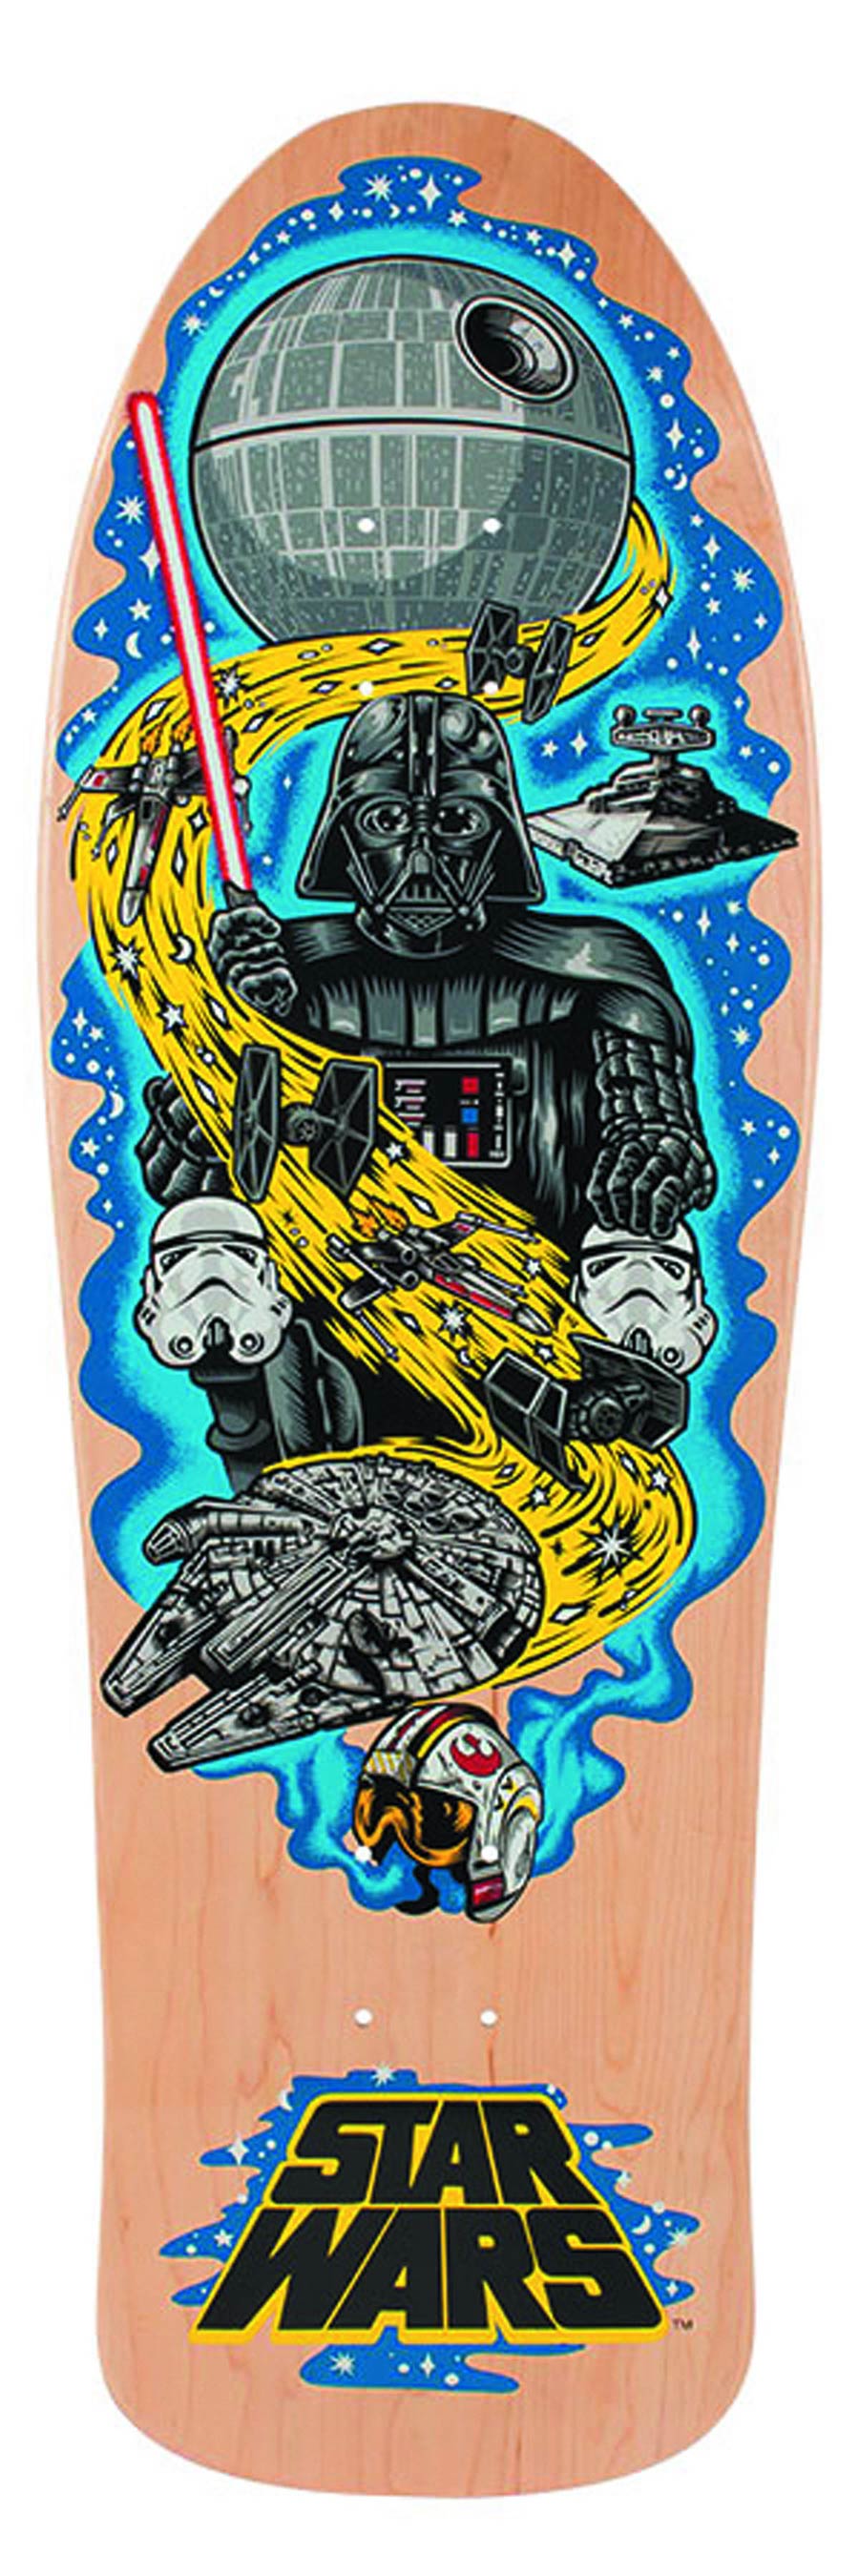 Star Wars Vader Neptune Shred Ready Skateboard Deck - Natural